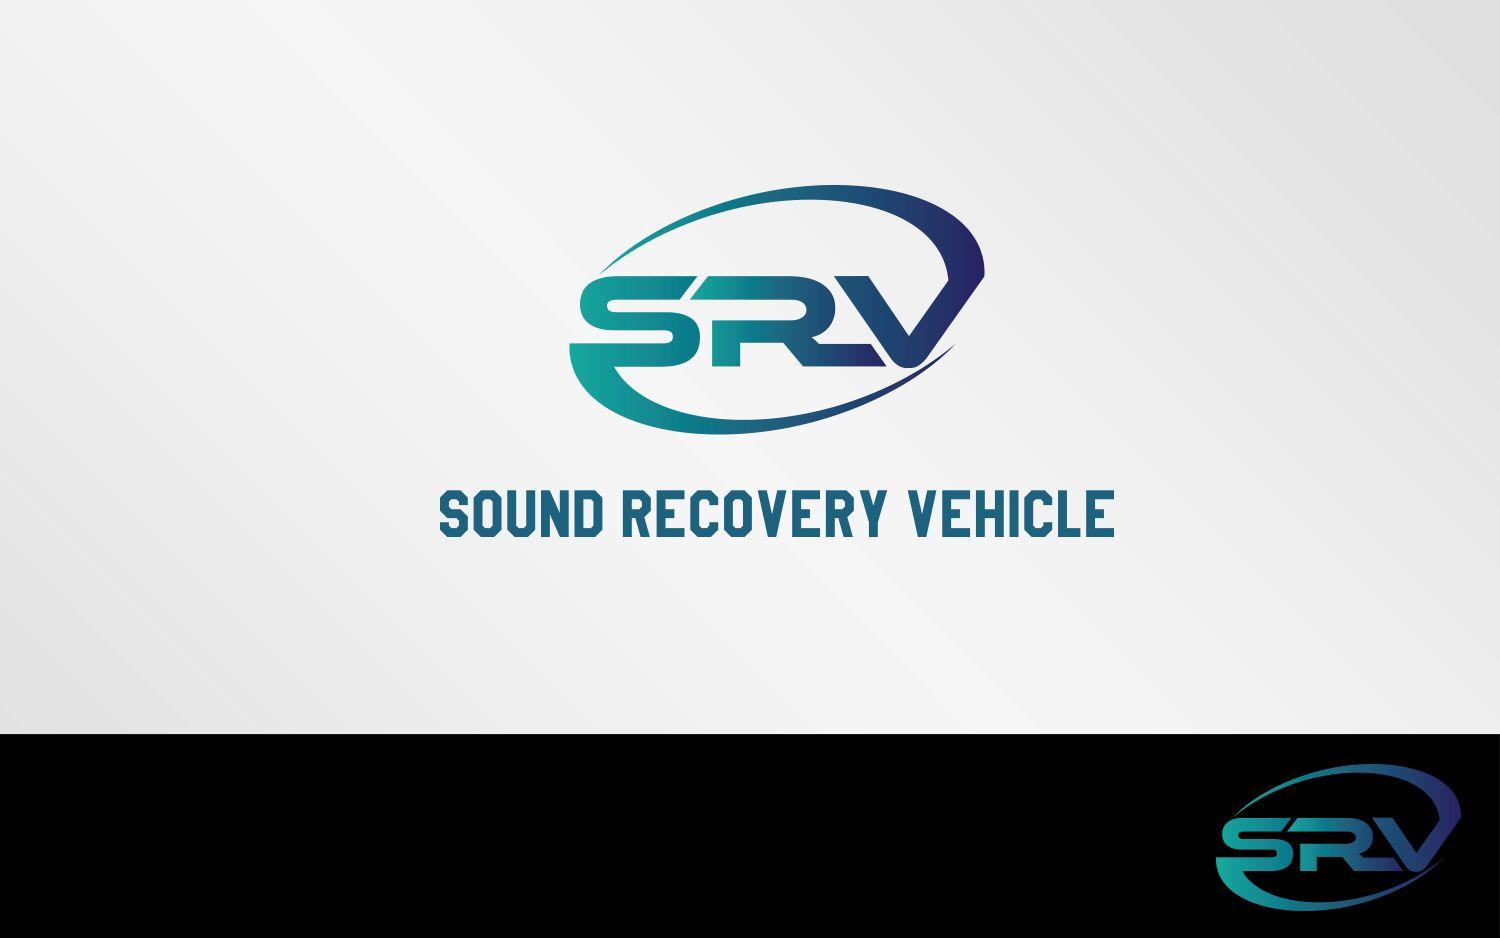 SRV Logo - Logo Design for SRV Sound Recovery Vehicle by Grafactory | Design ...